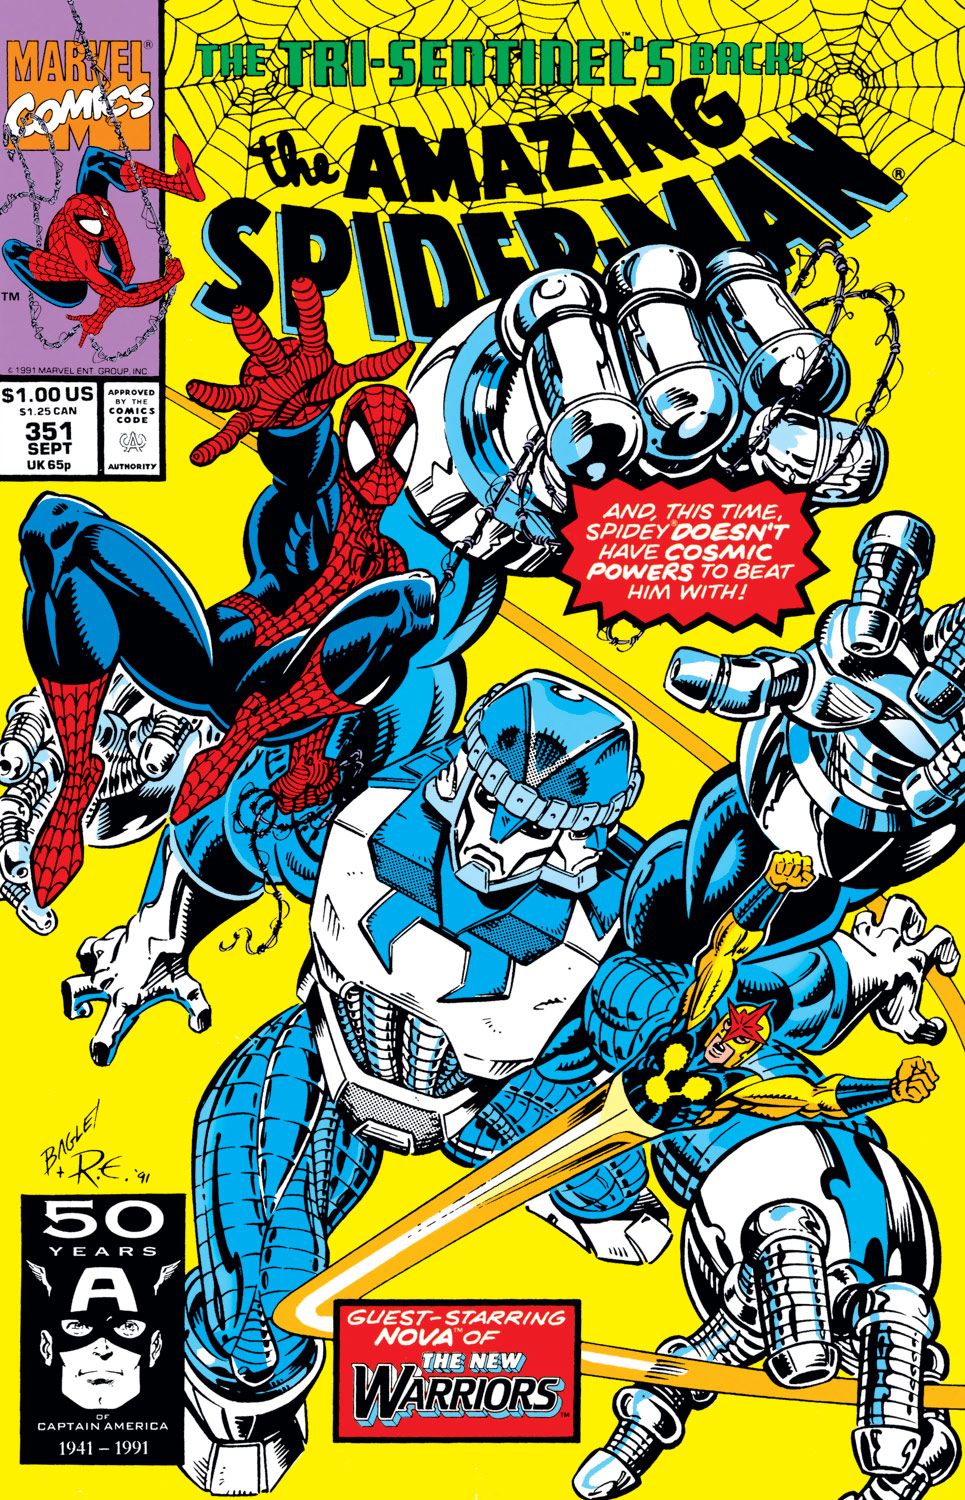 The Amazing Spider-Man (1963) #351